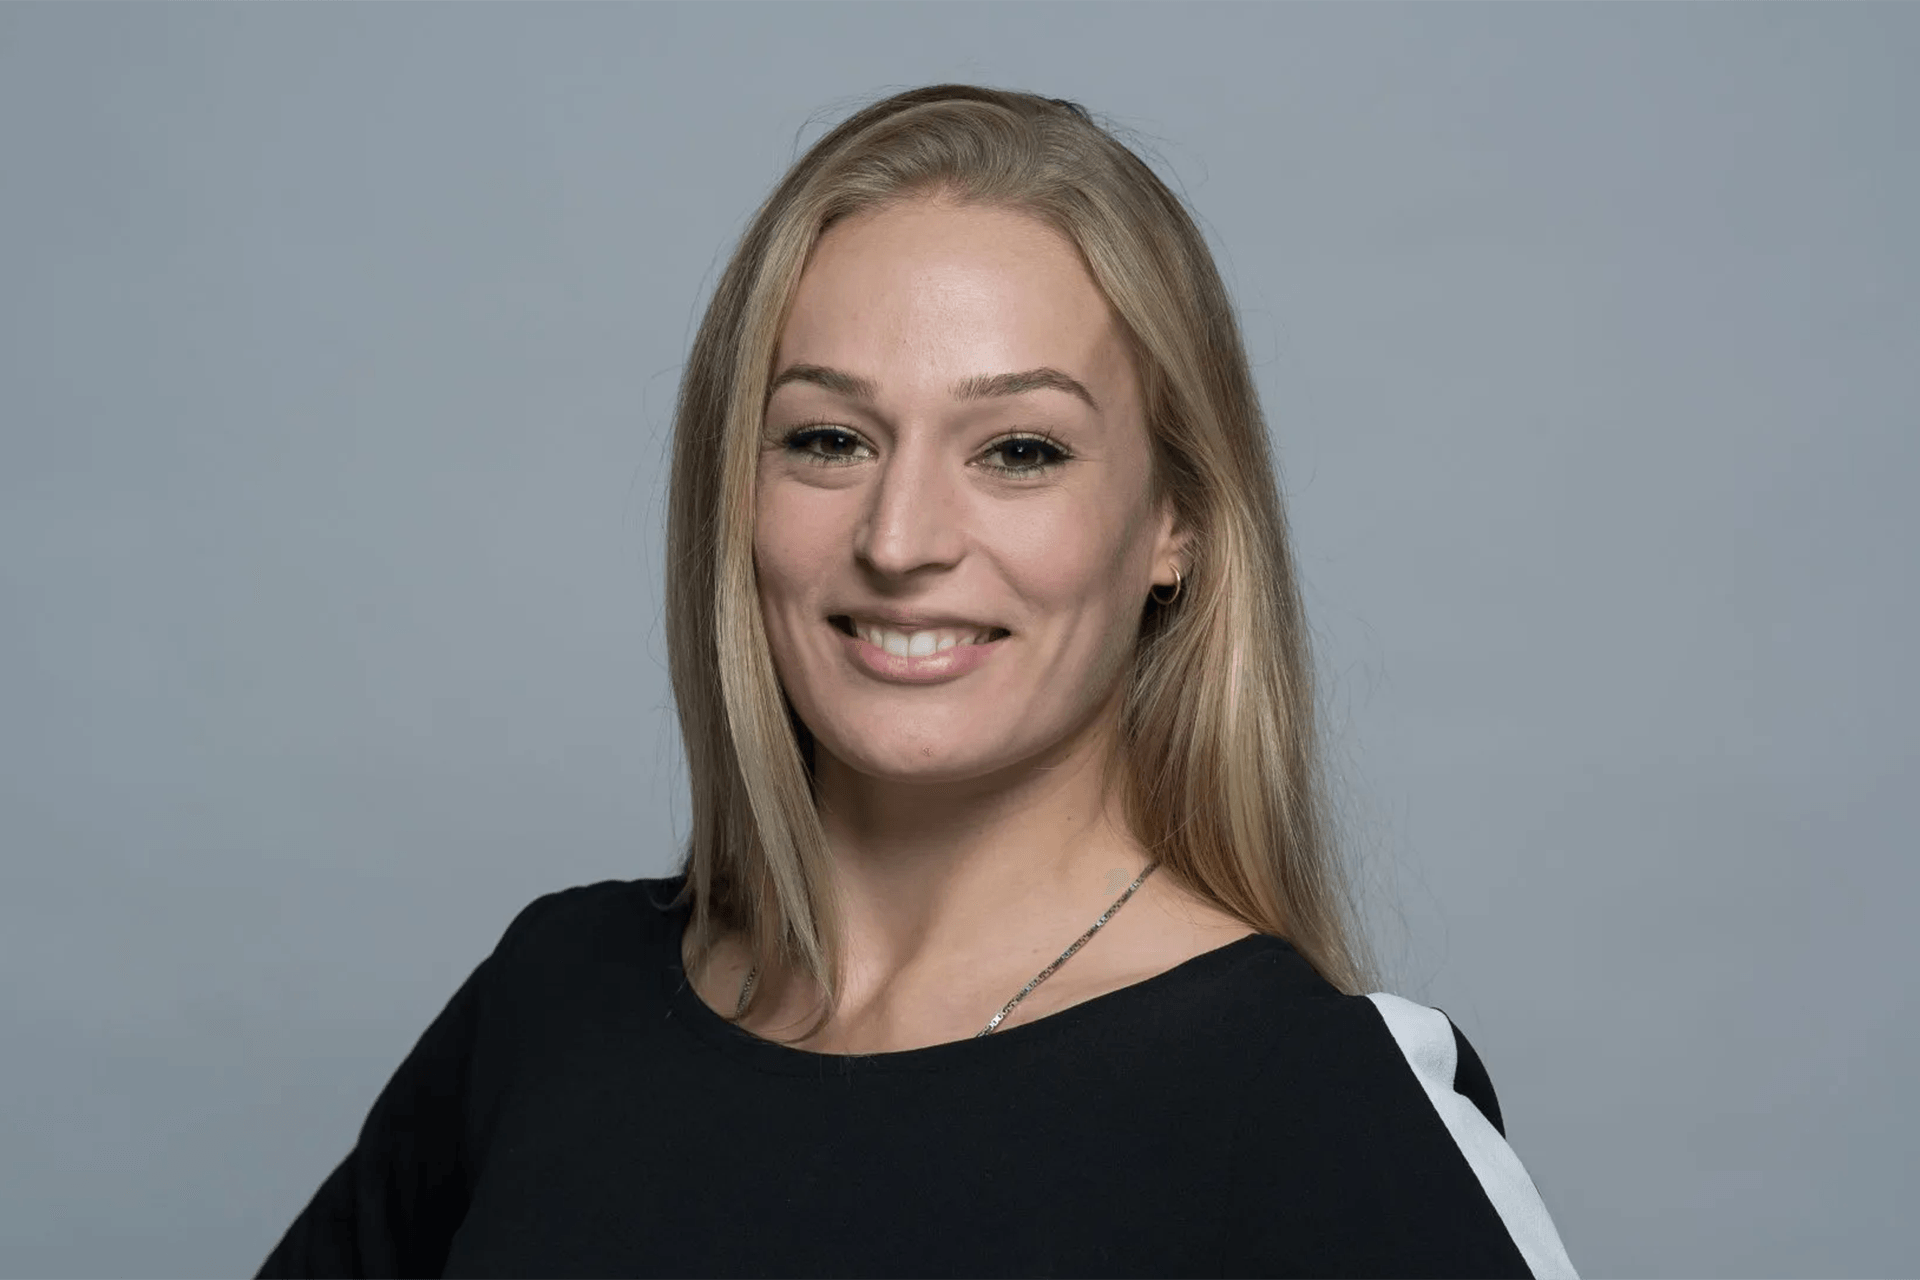 Dual career advisor of the University of Mannheim: Larissa Schilde